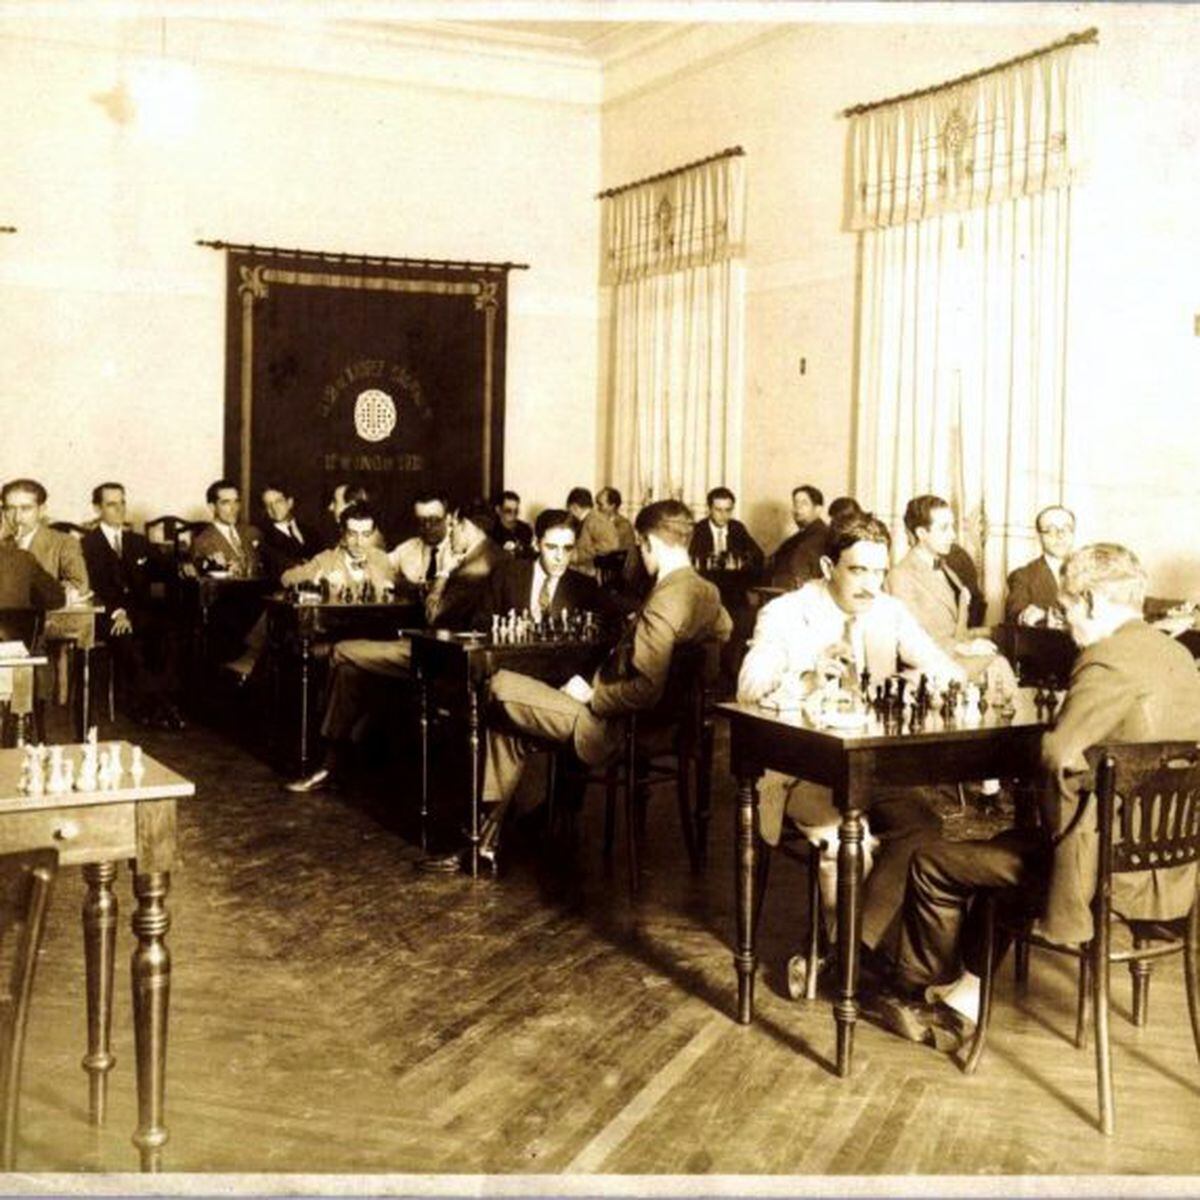 Clube de Xadrez Ipiranga